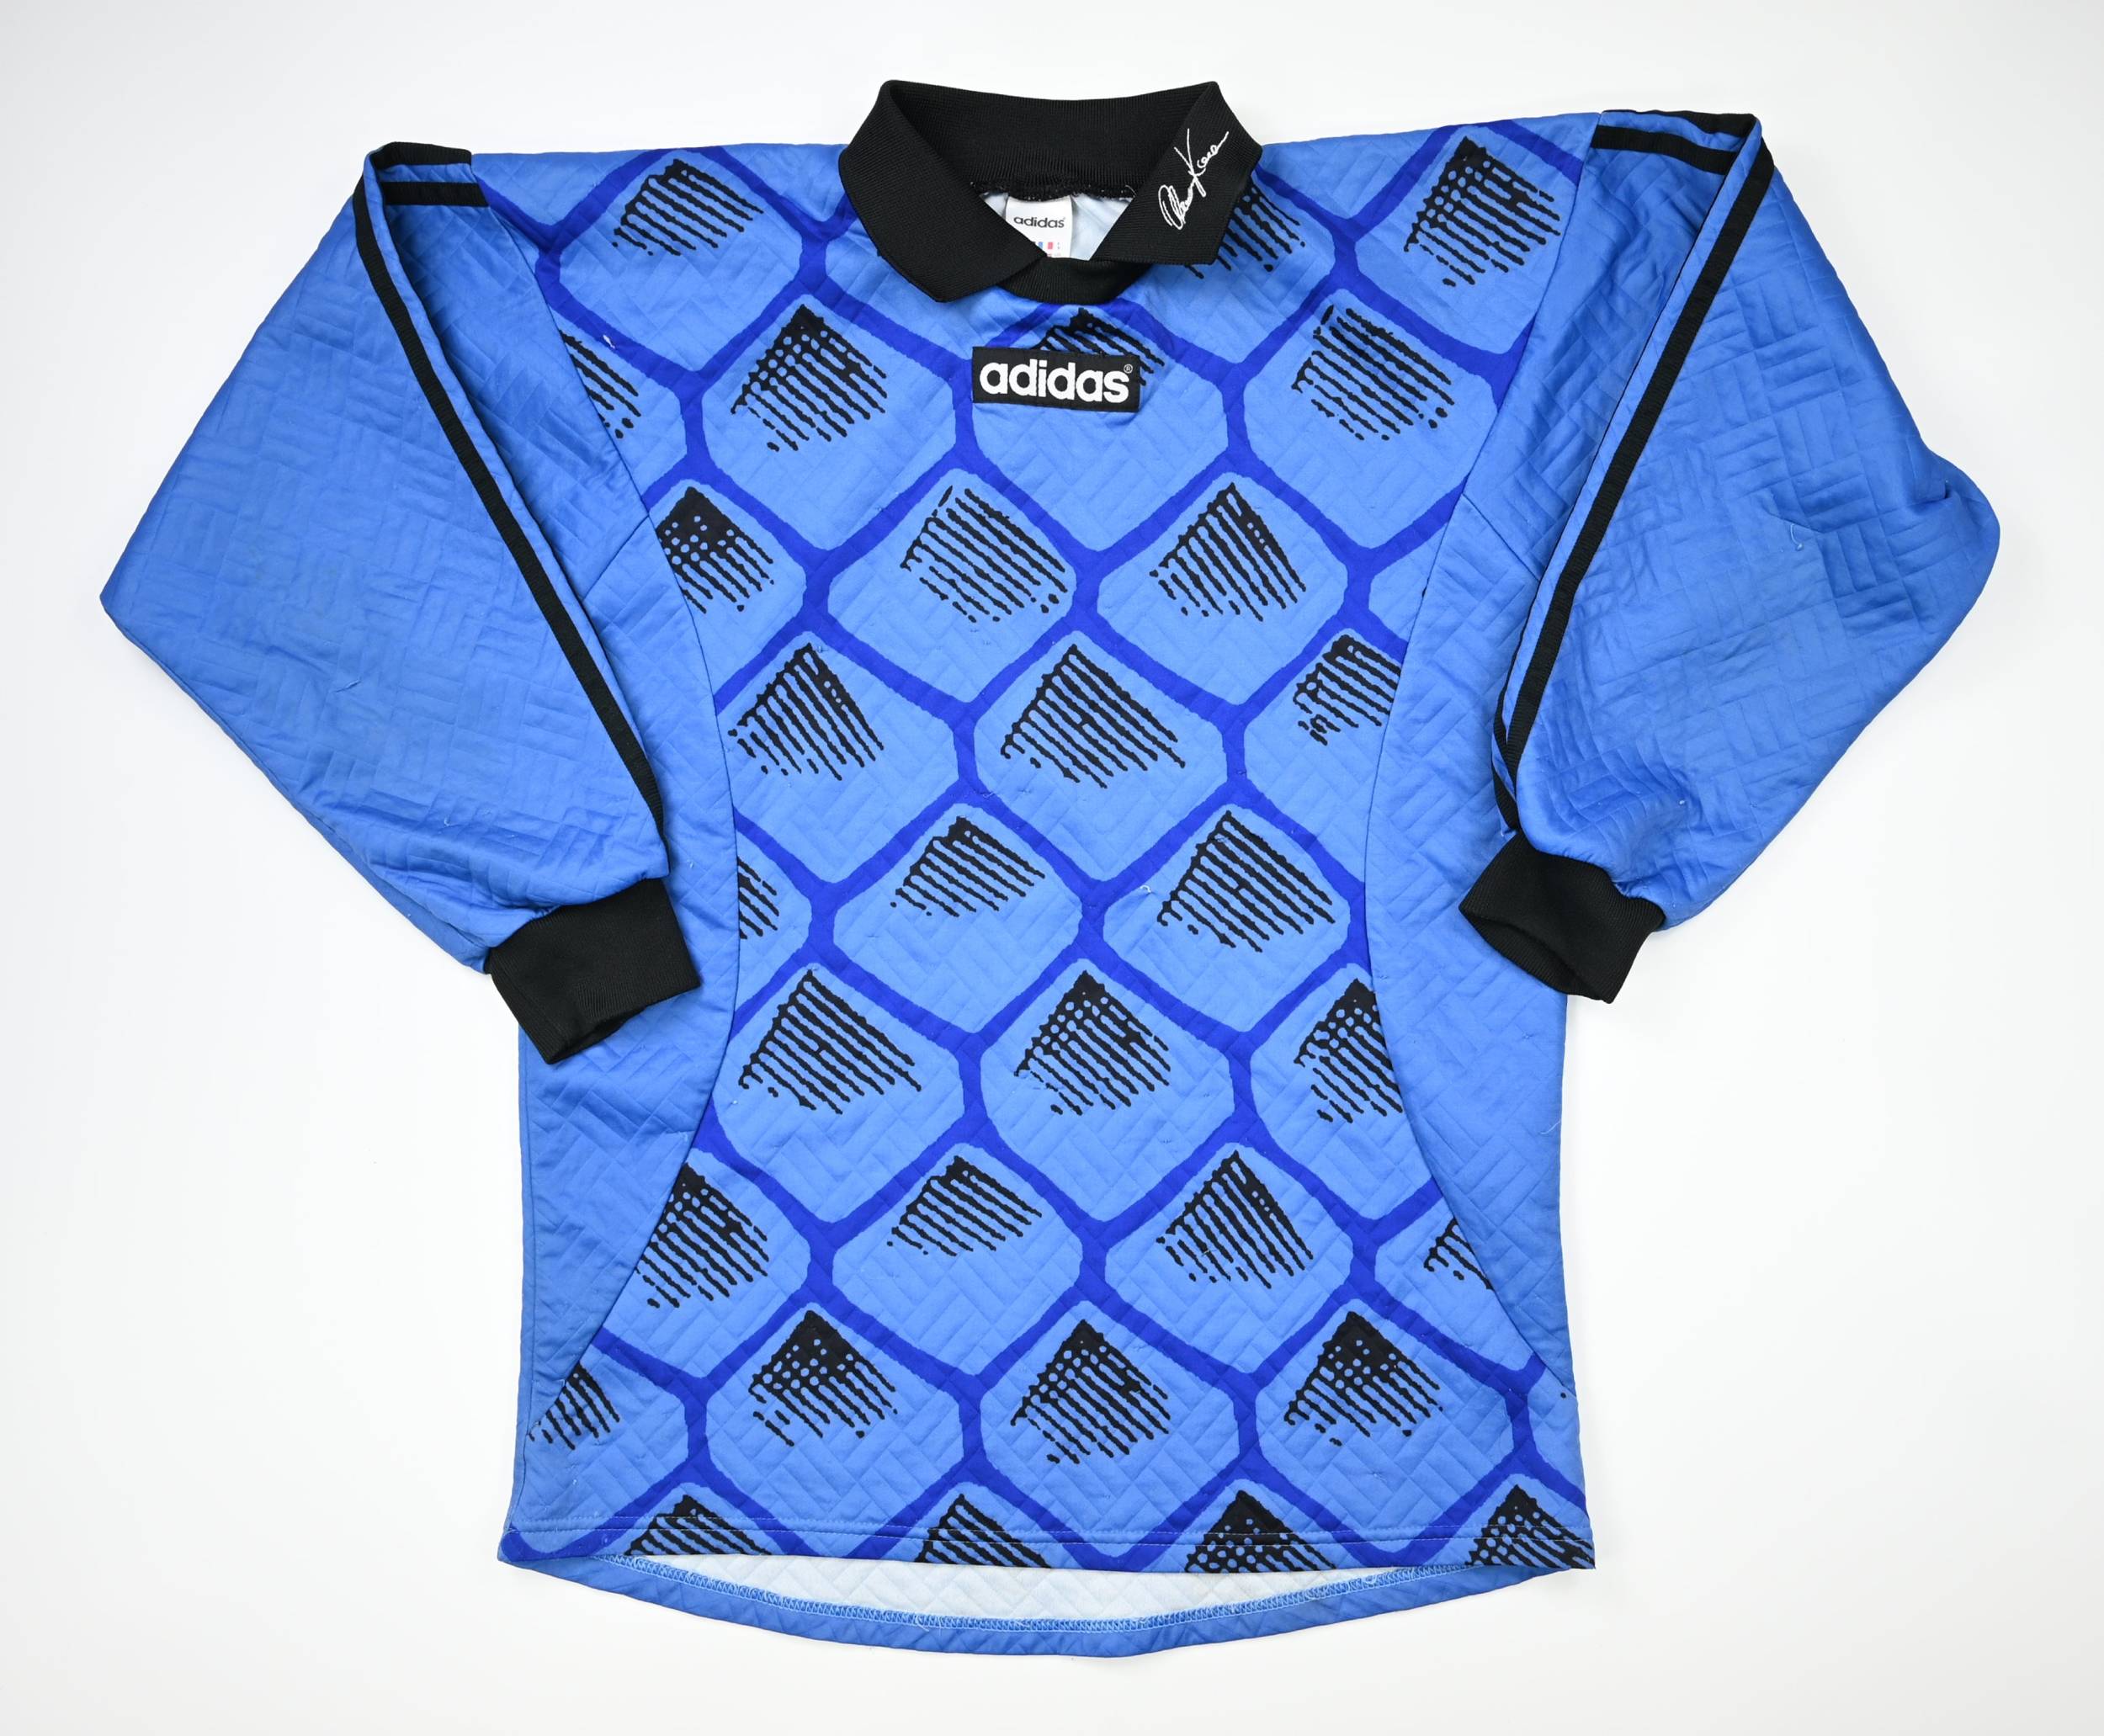 Adidas Jersey Adidas Shirt Vintage Adidas Goalkeeper Shirt